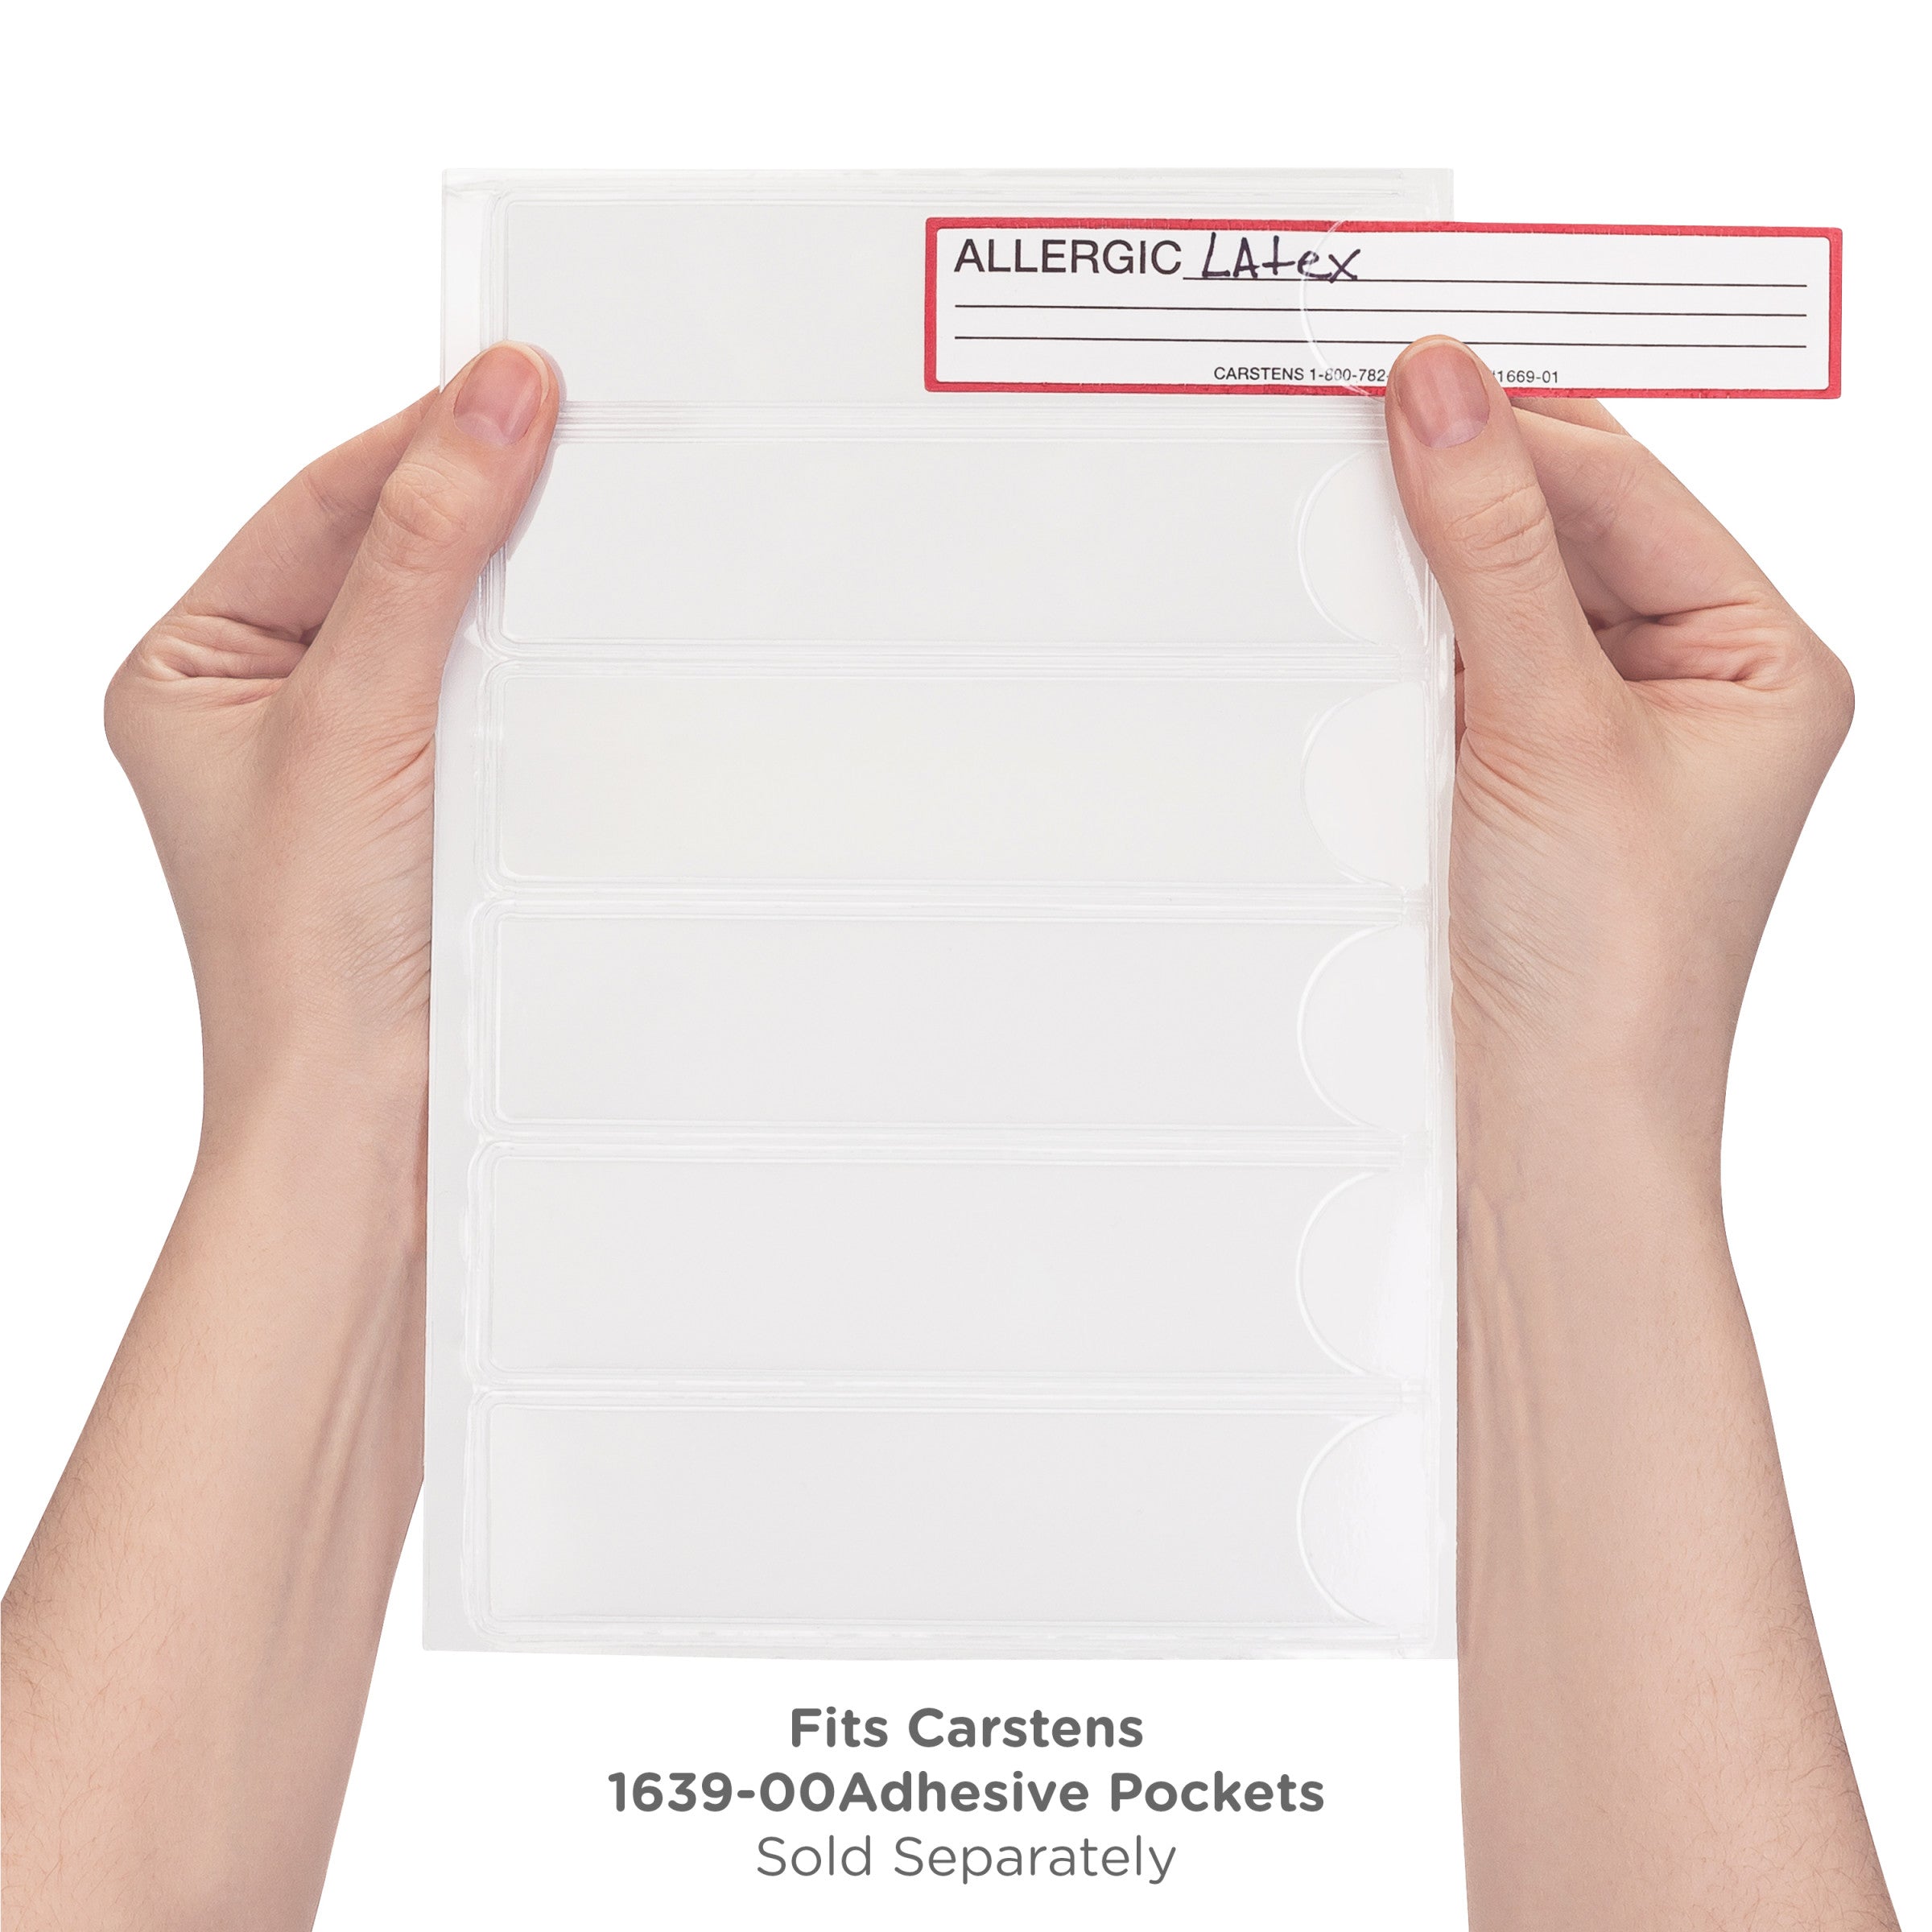 Allergic Alert/Instruction Card, White, W5.25" x H1" (100 pack)